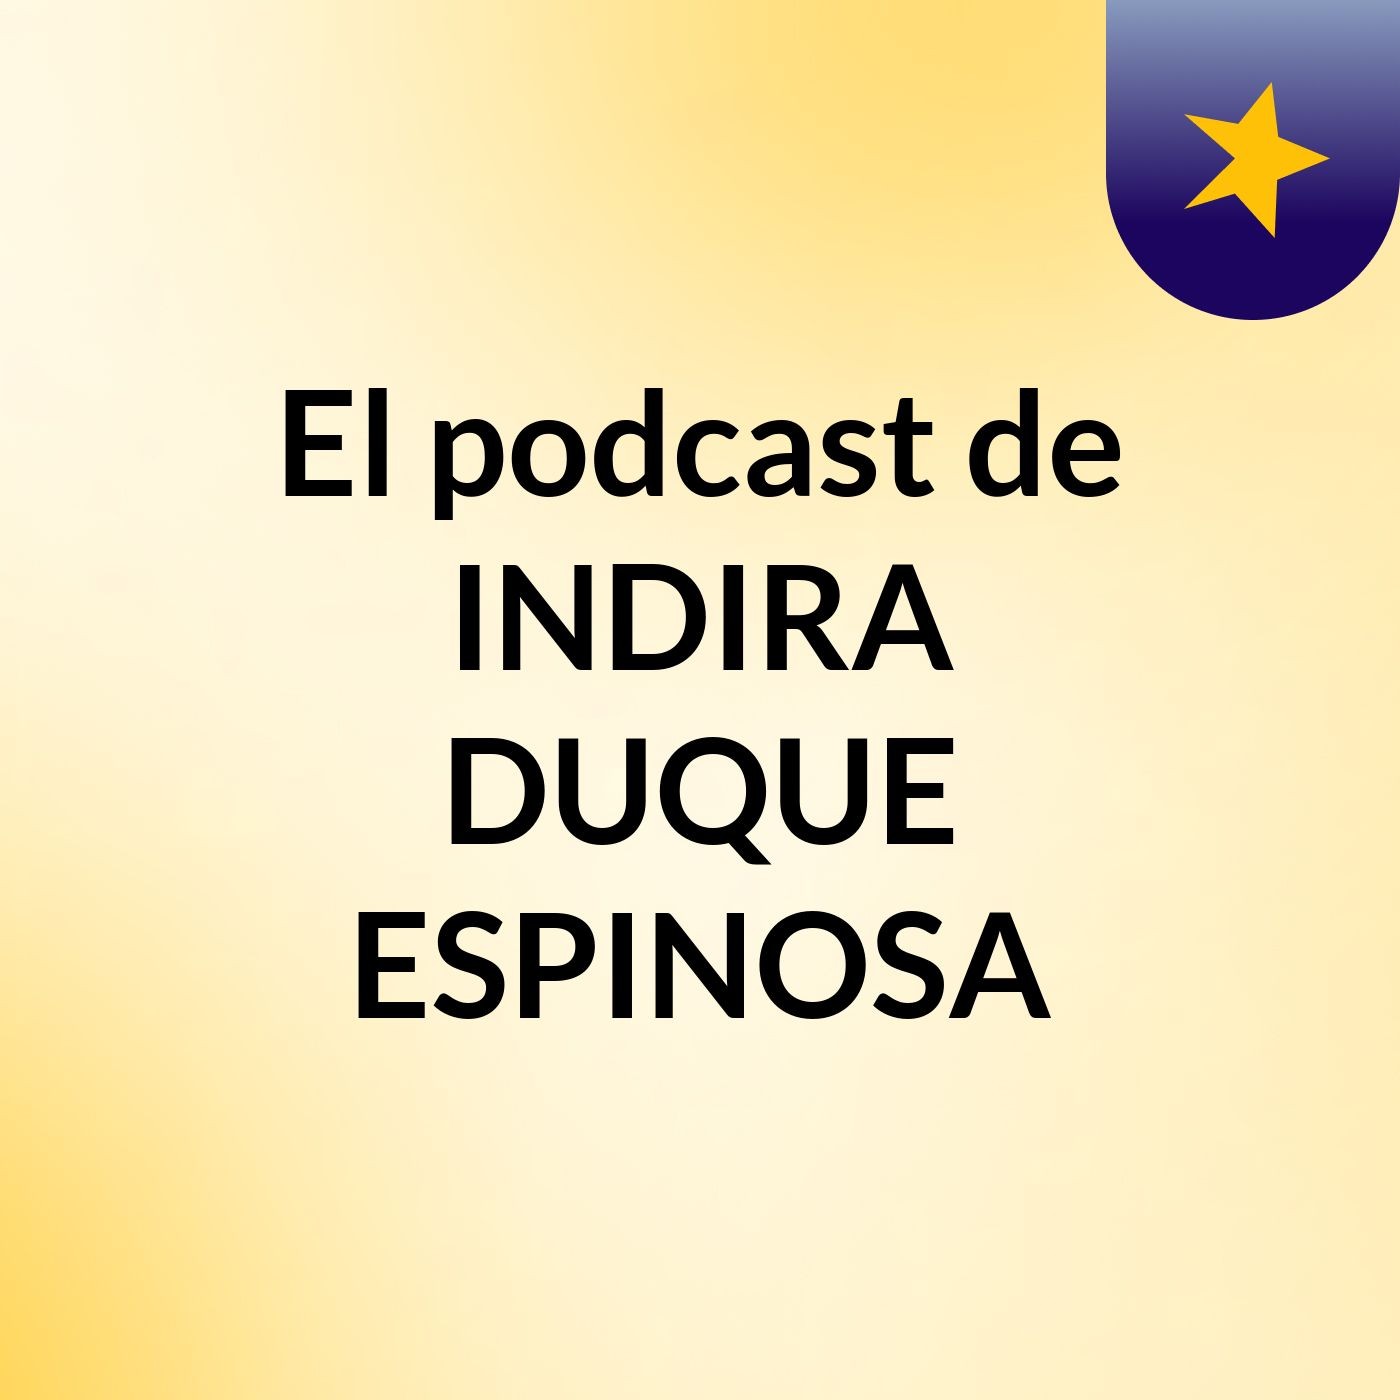 El podcast de INDIRA DUQUE ESPINOSA